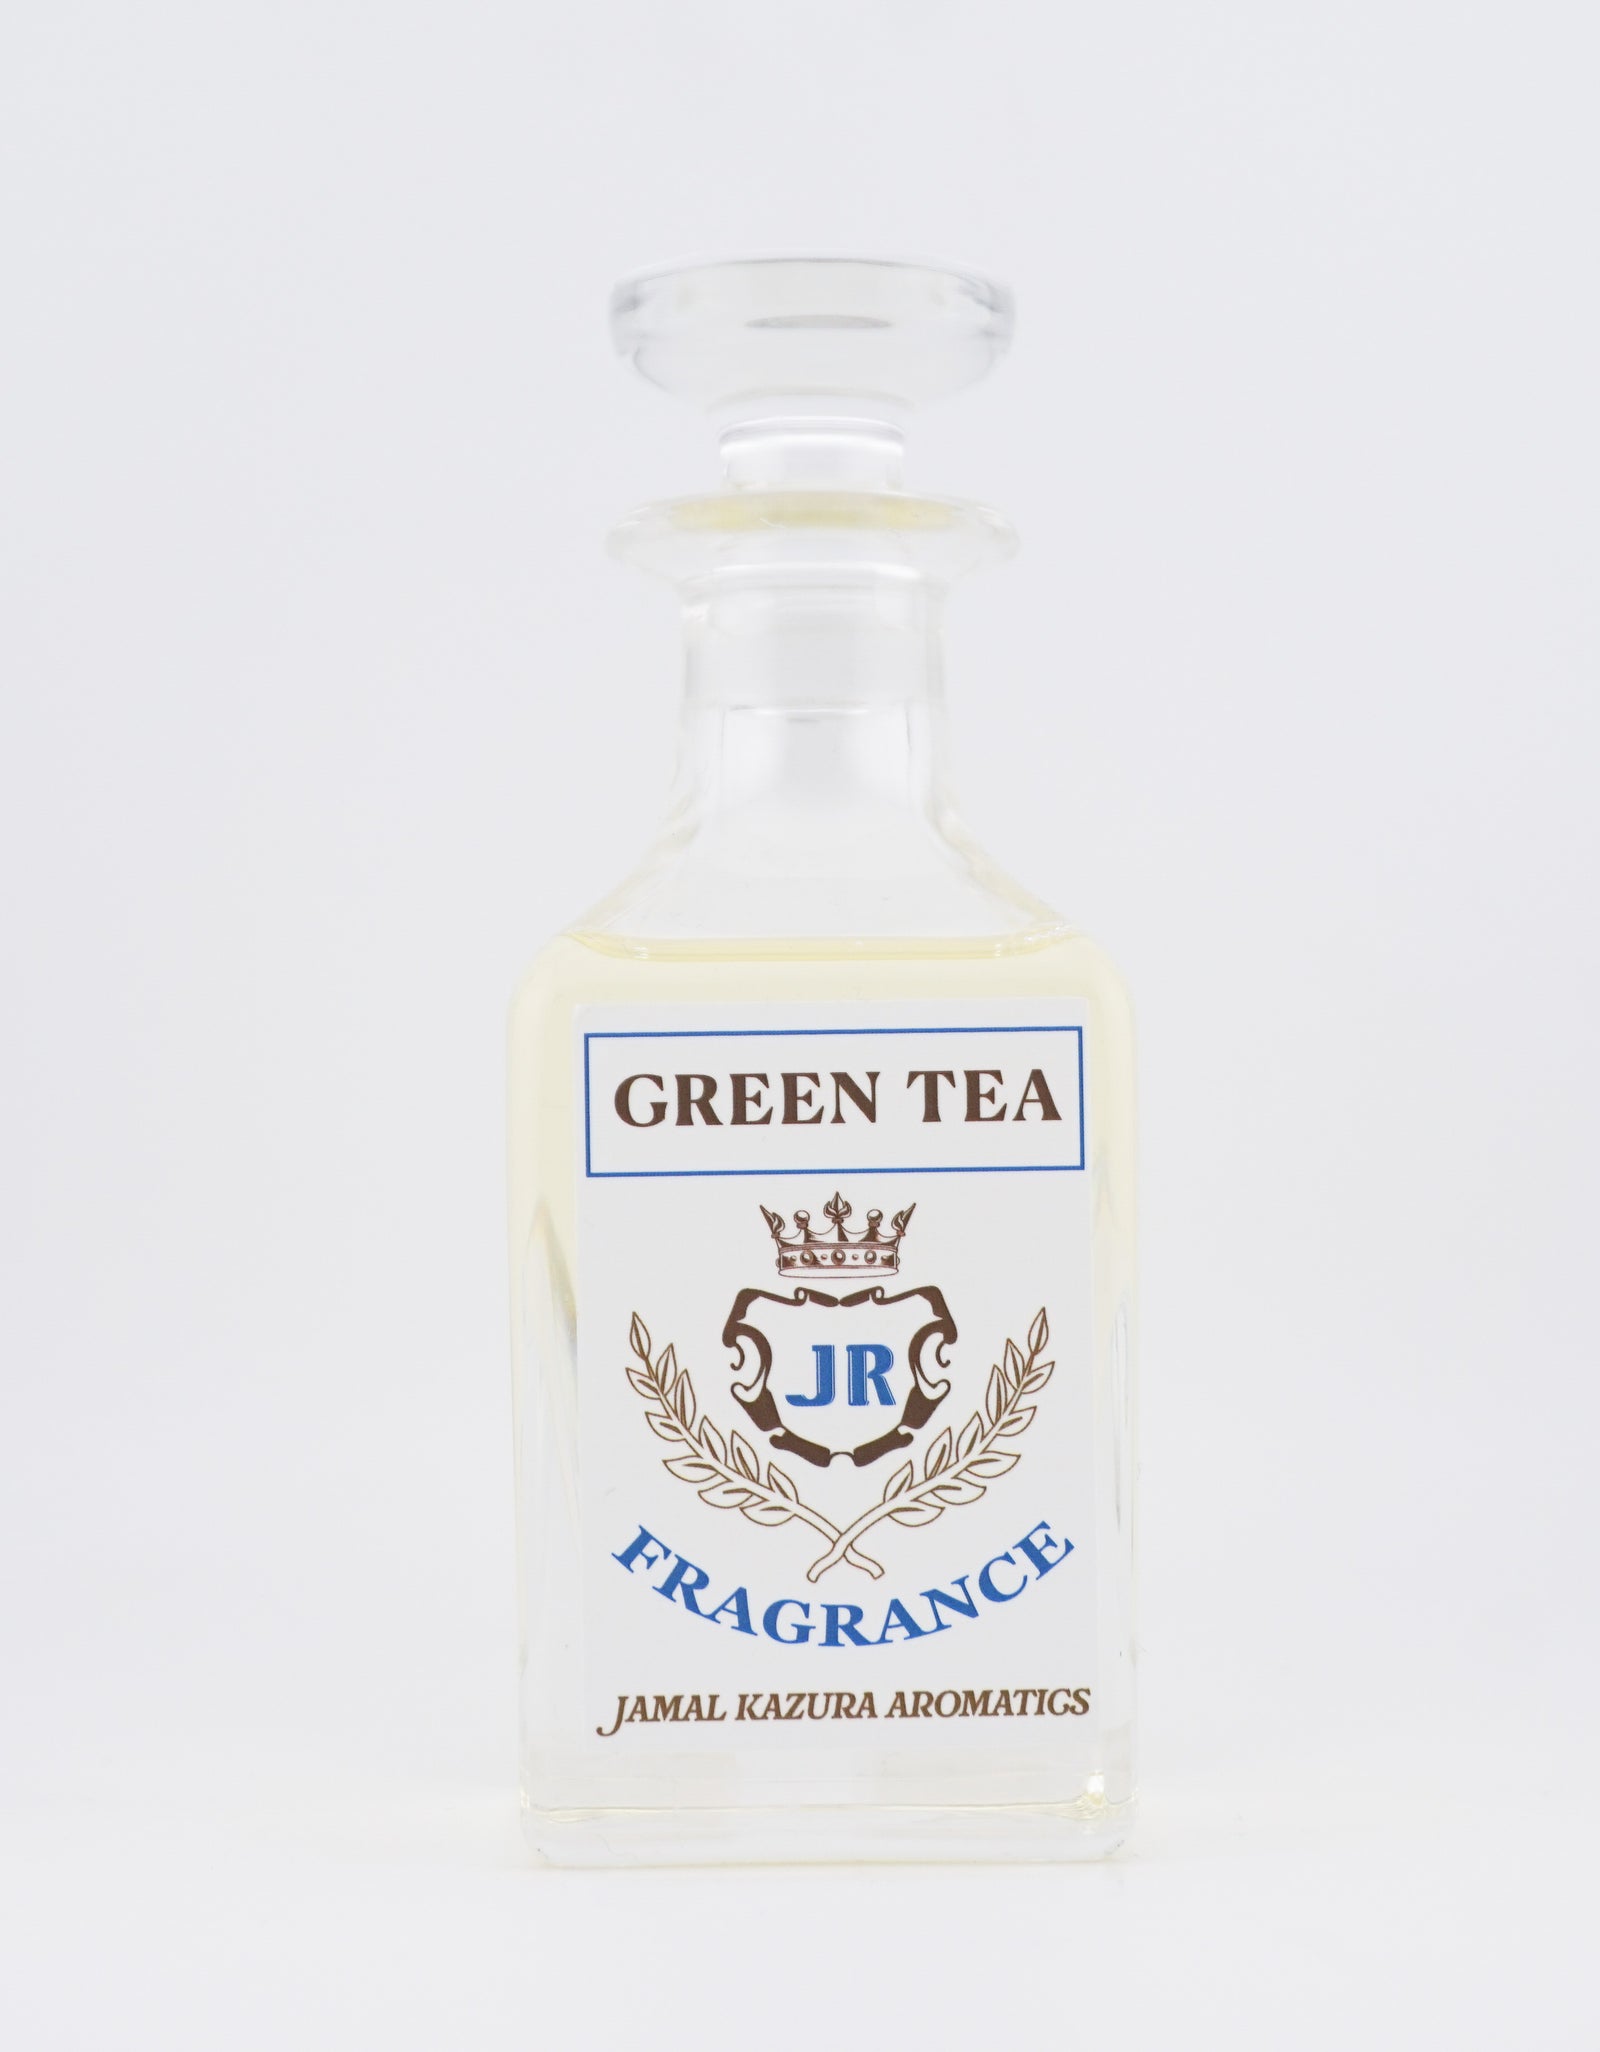 Green Tea Perfume Decanters - Jamal Kazura Aromatics